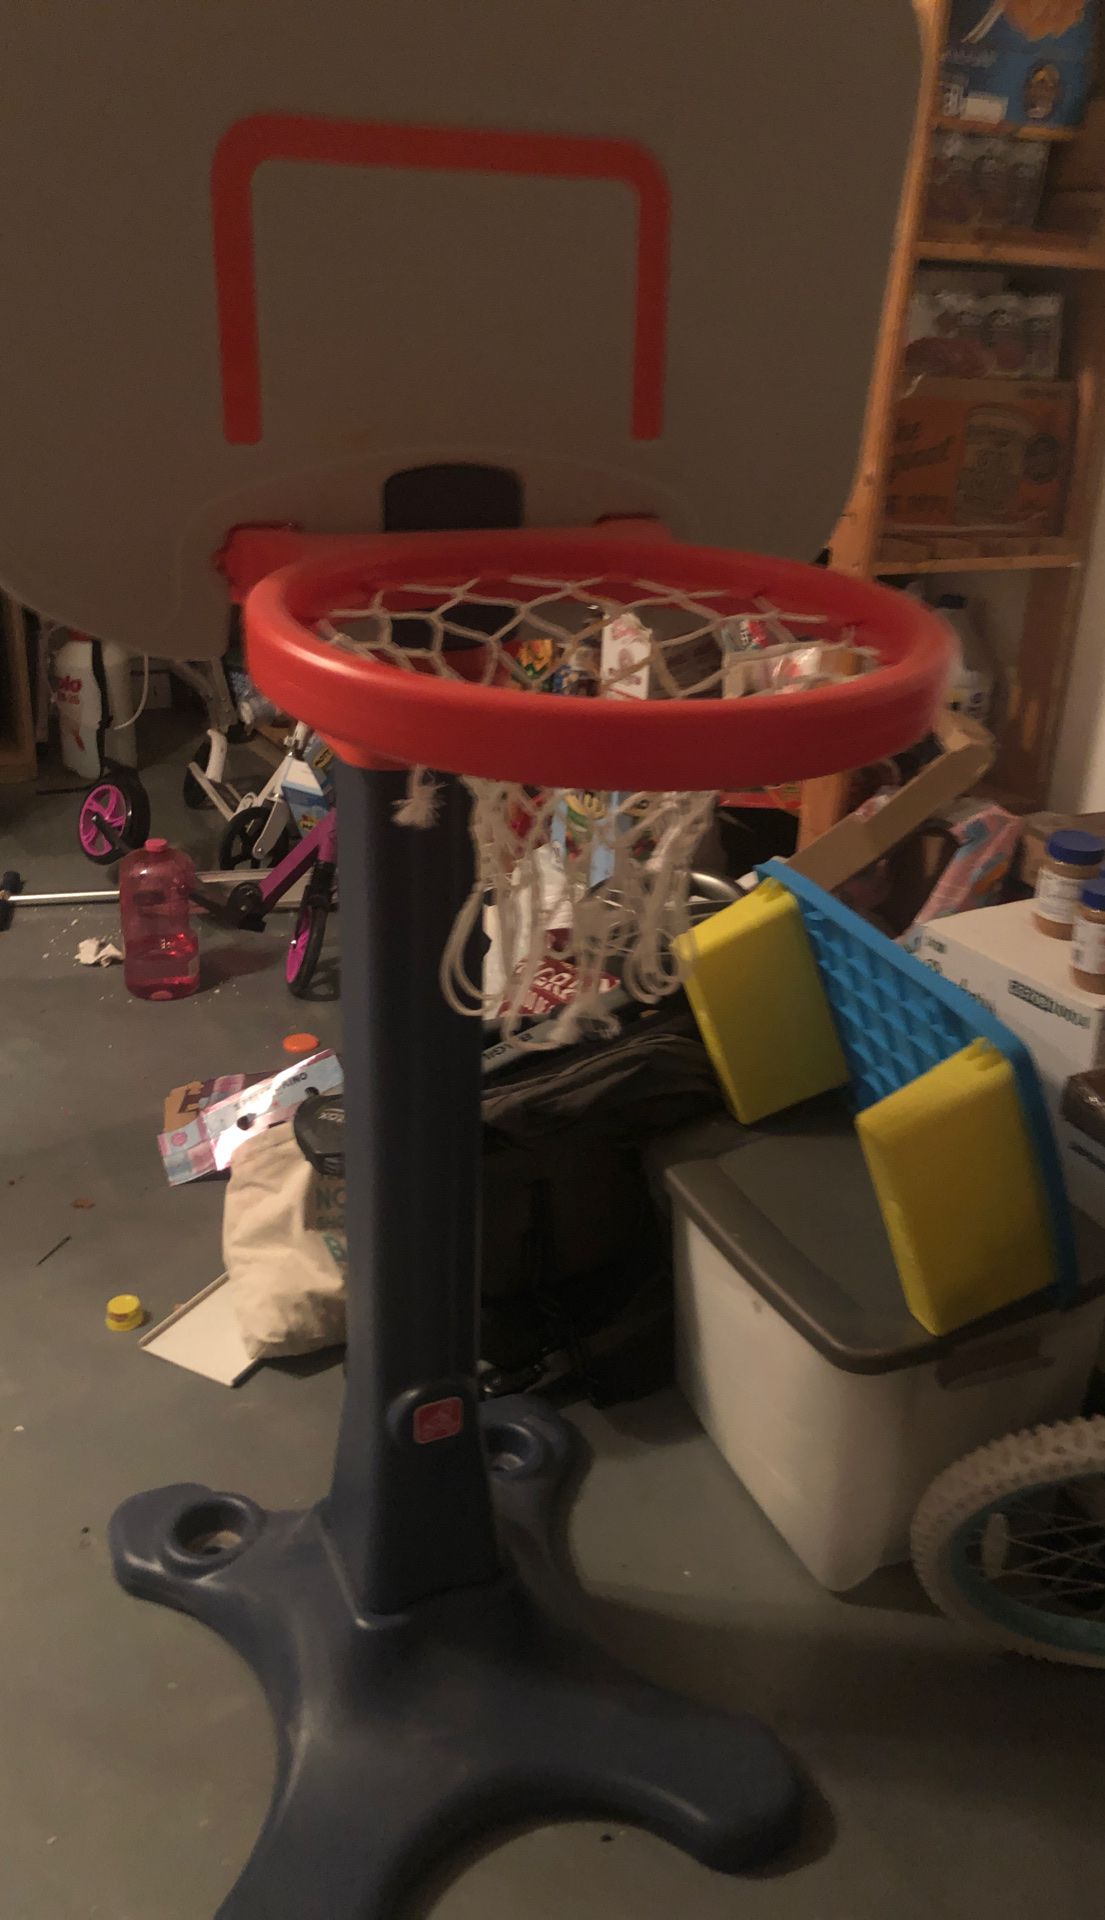 Adjustable indoor basketball hoops with jnflatable ball